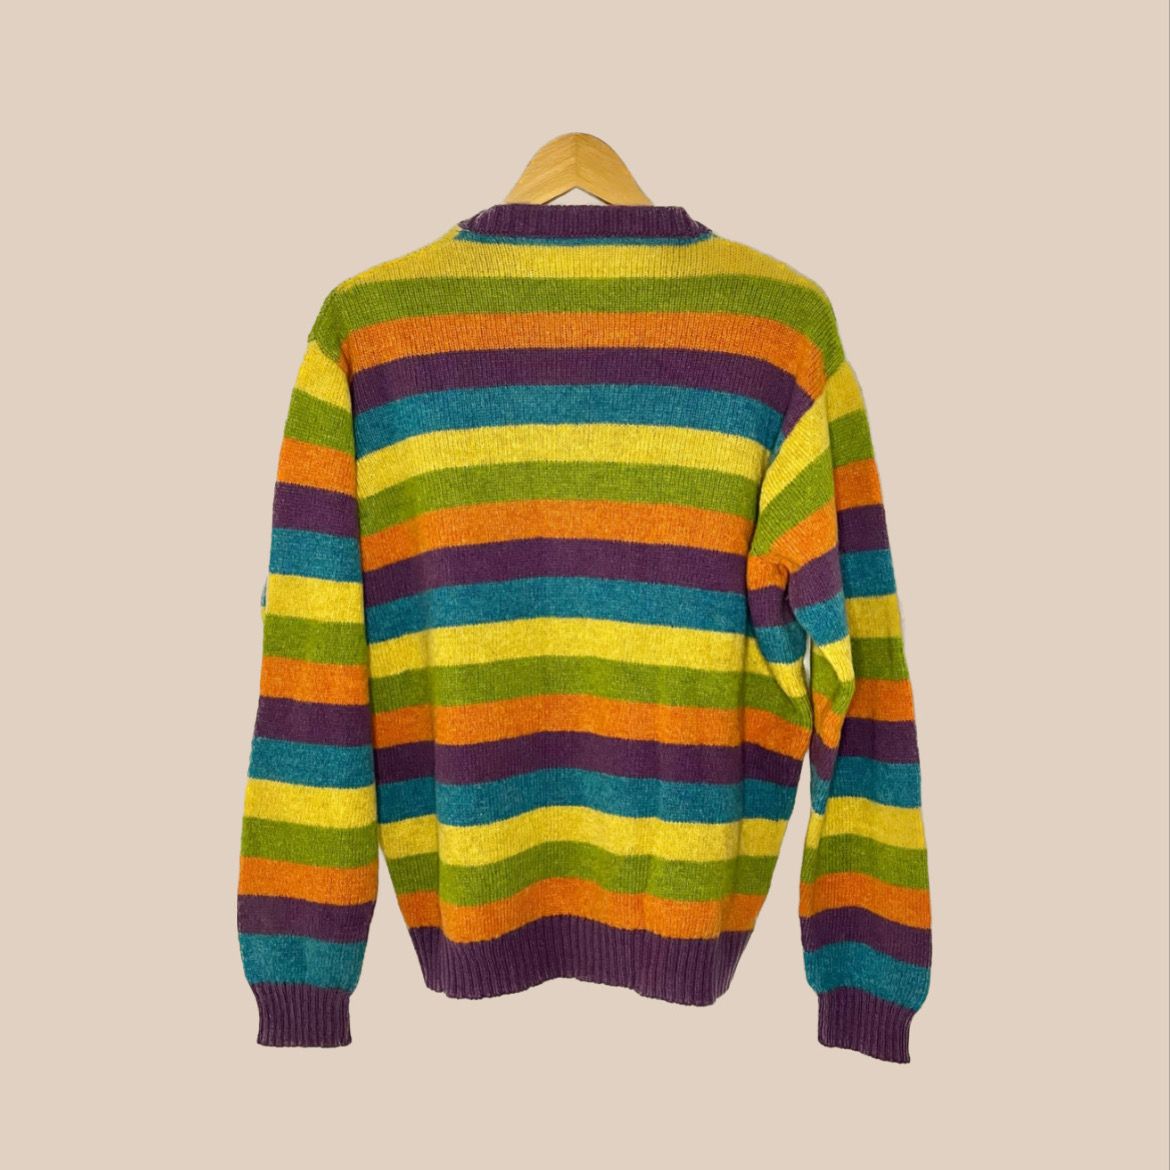 Vintage striped sweater